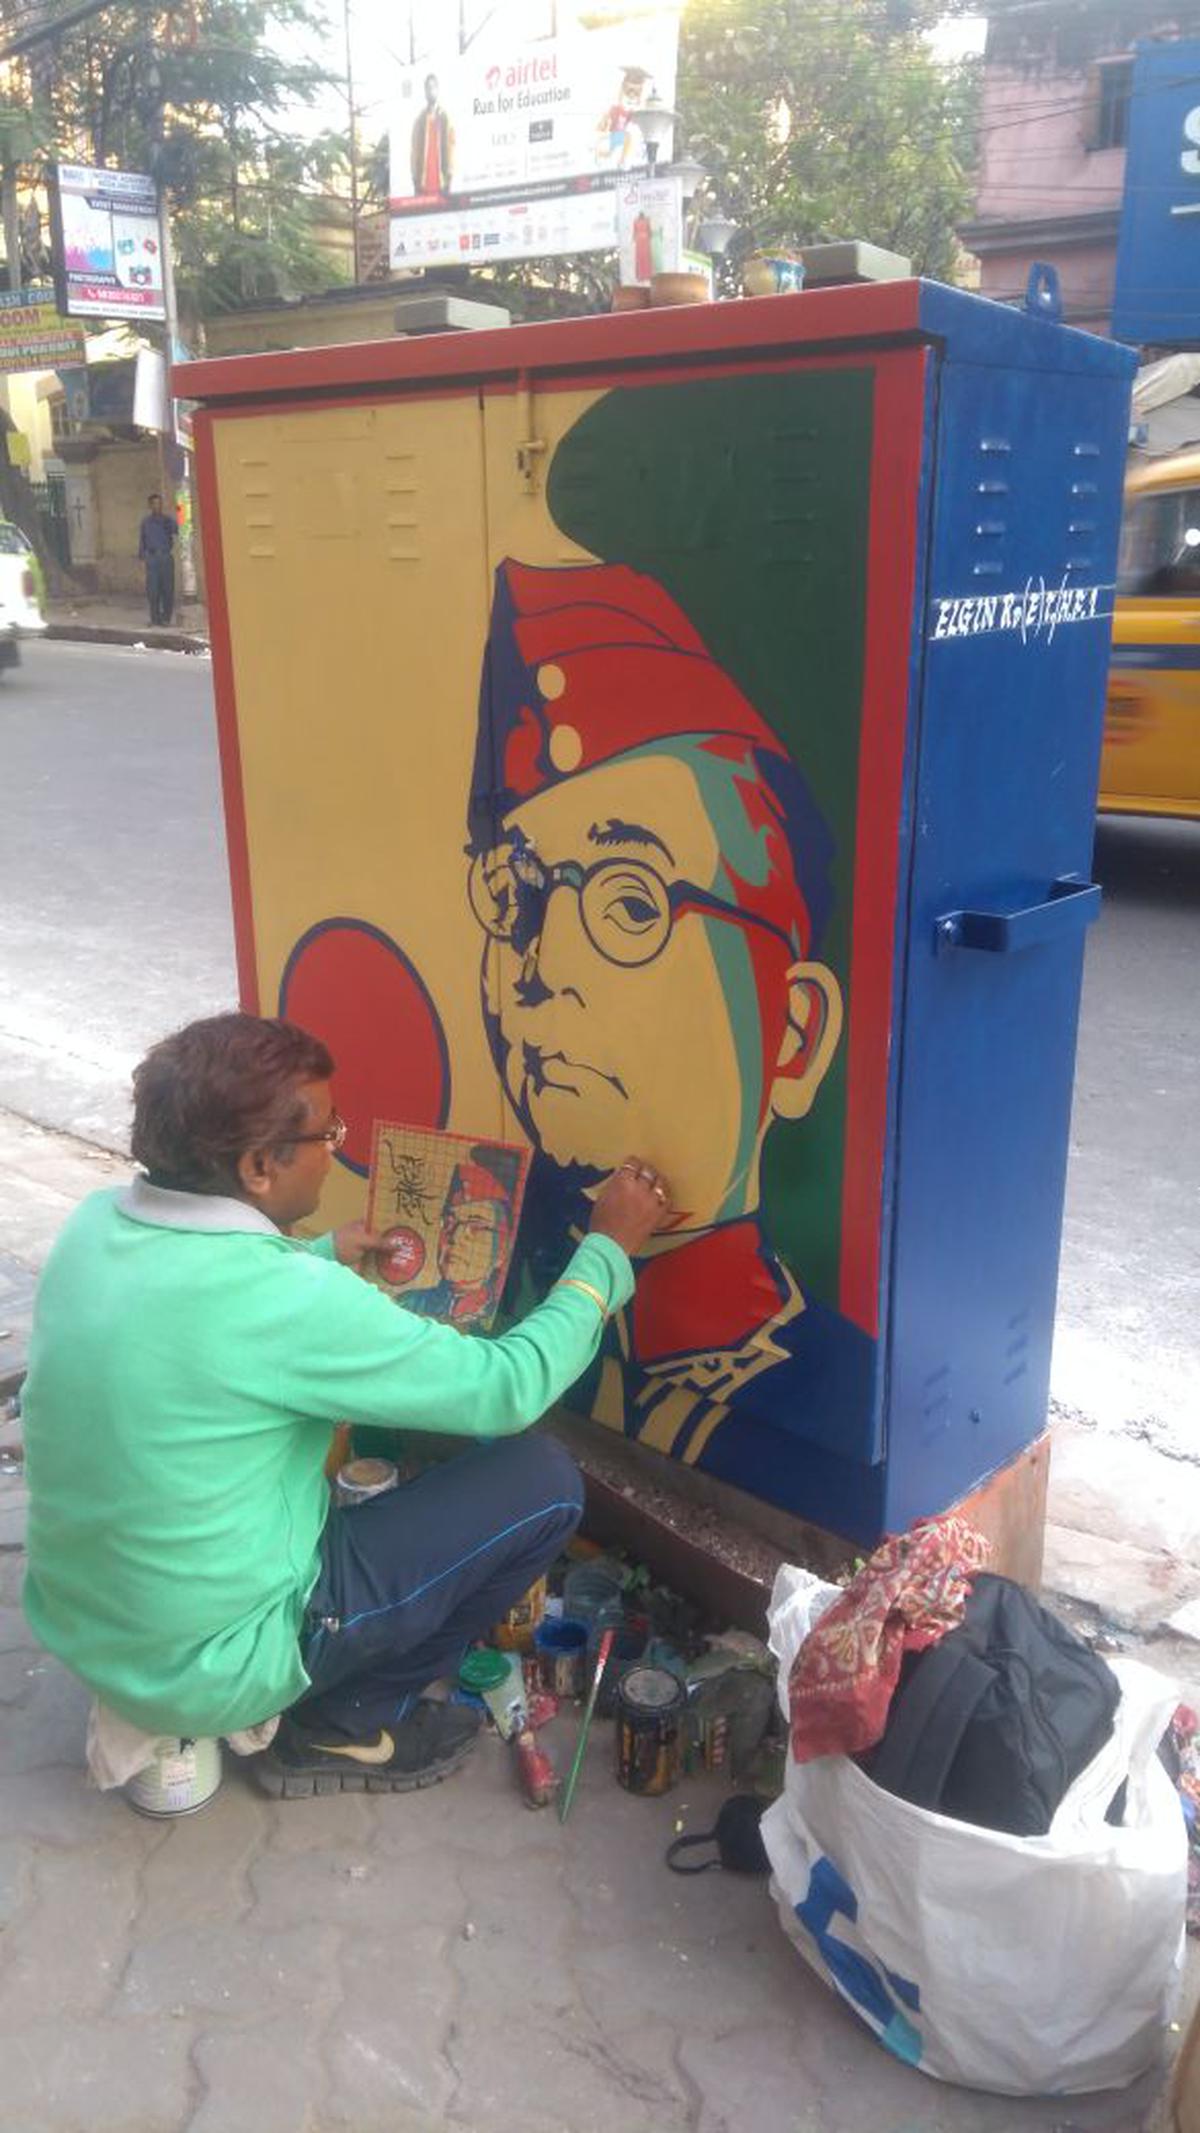 Mudar Patherya painting an electric feeder box